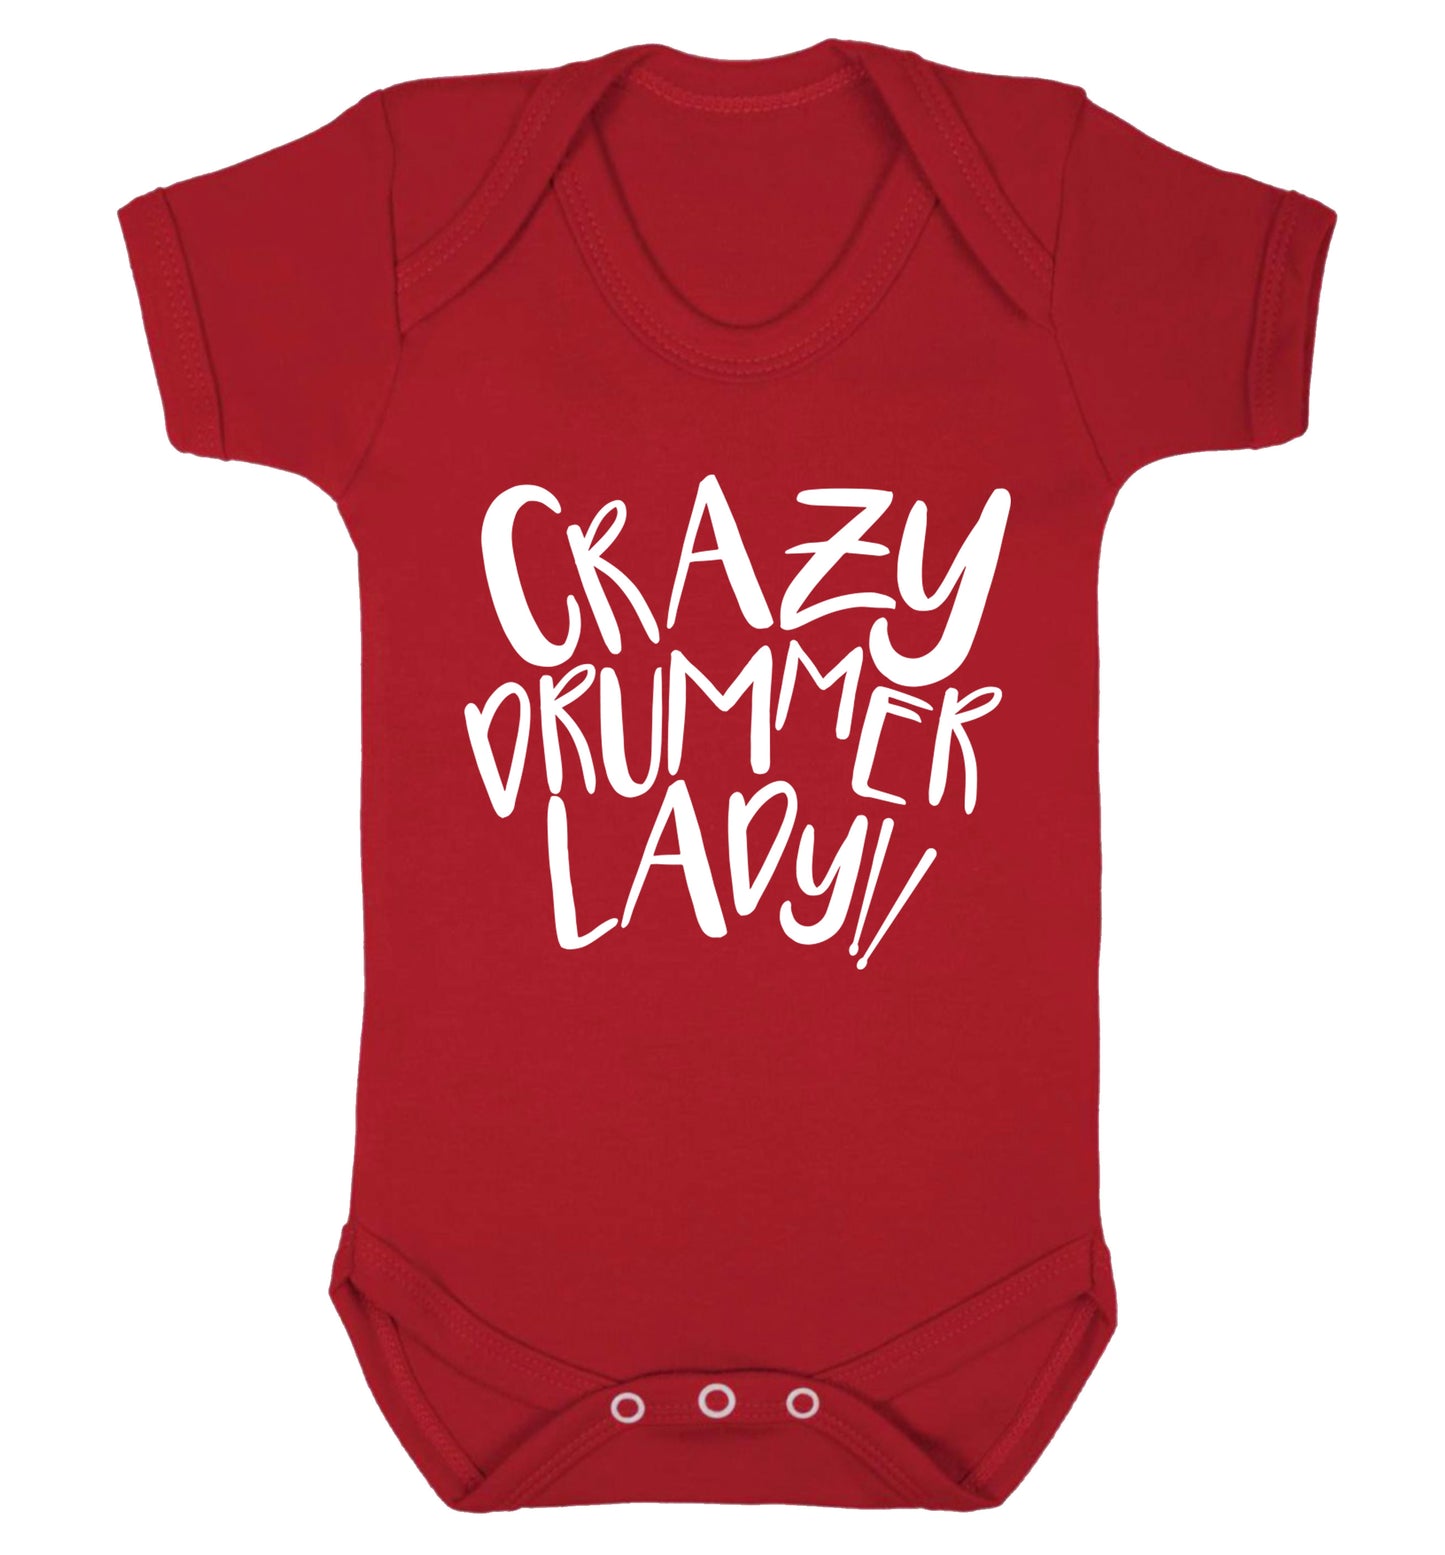 Crazy drummer lady Baby Vest red 18-24 months